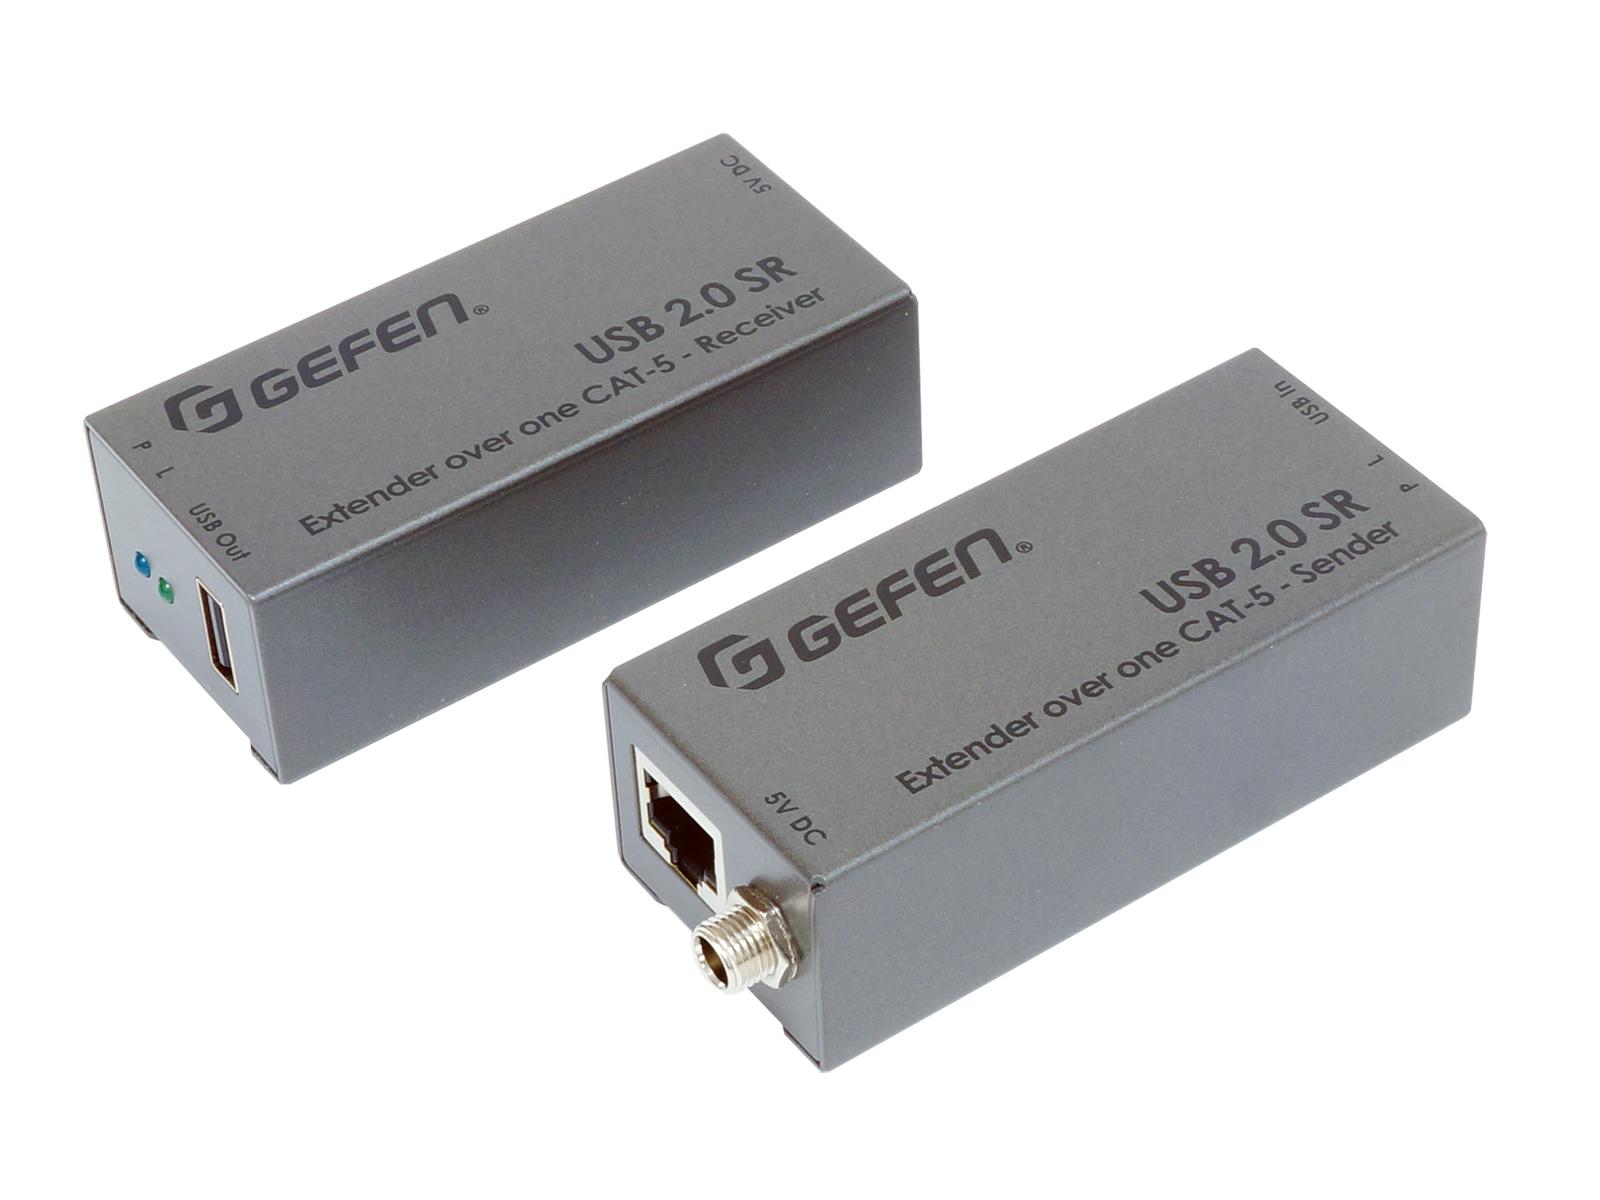 EXT-USB2.0-SR USB 2.0 SR Extender (Transmitter/Receiver) Set over one CAT-5 Cable by Gefen